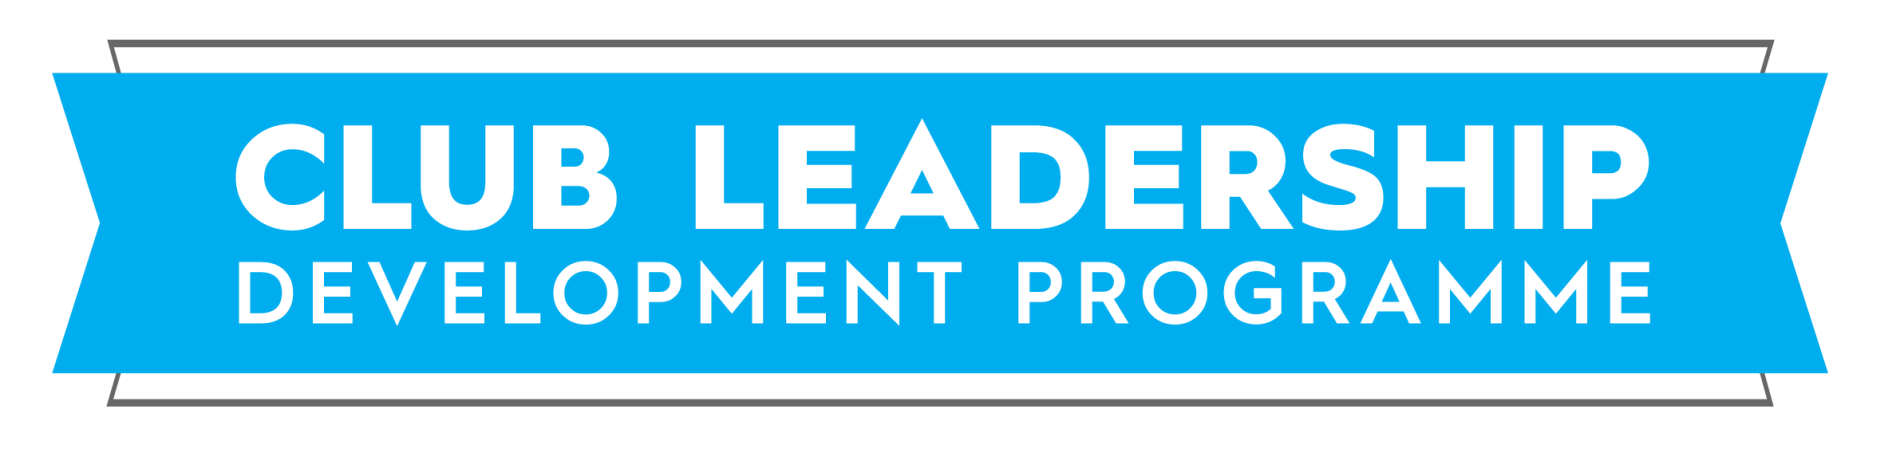 GAA Club Leadership Development Programme - Dublin (001)